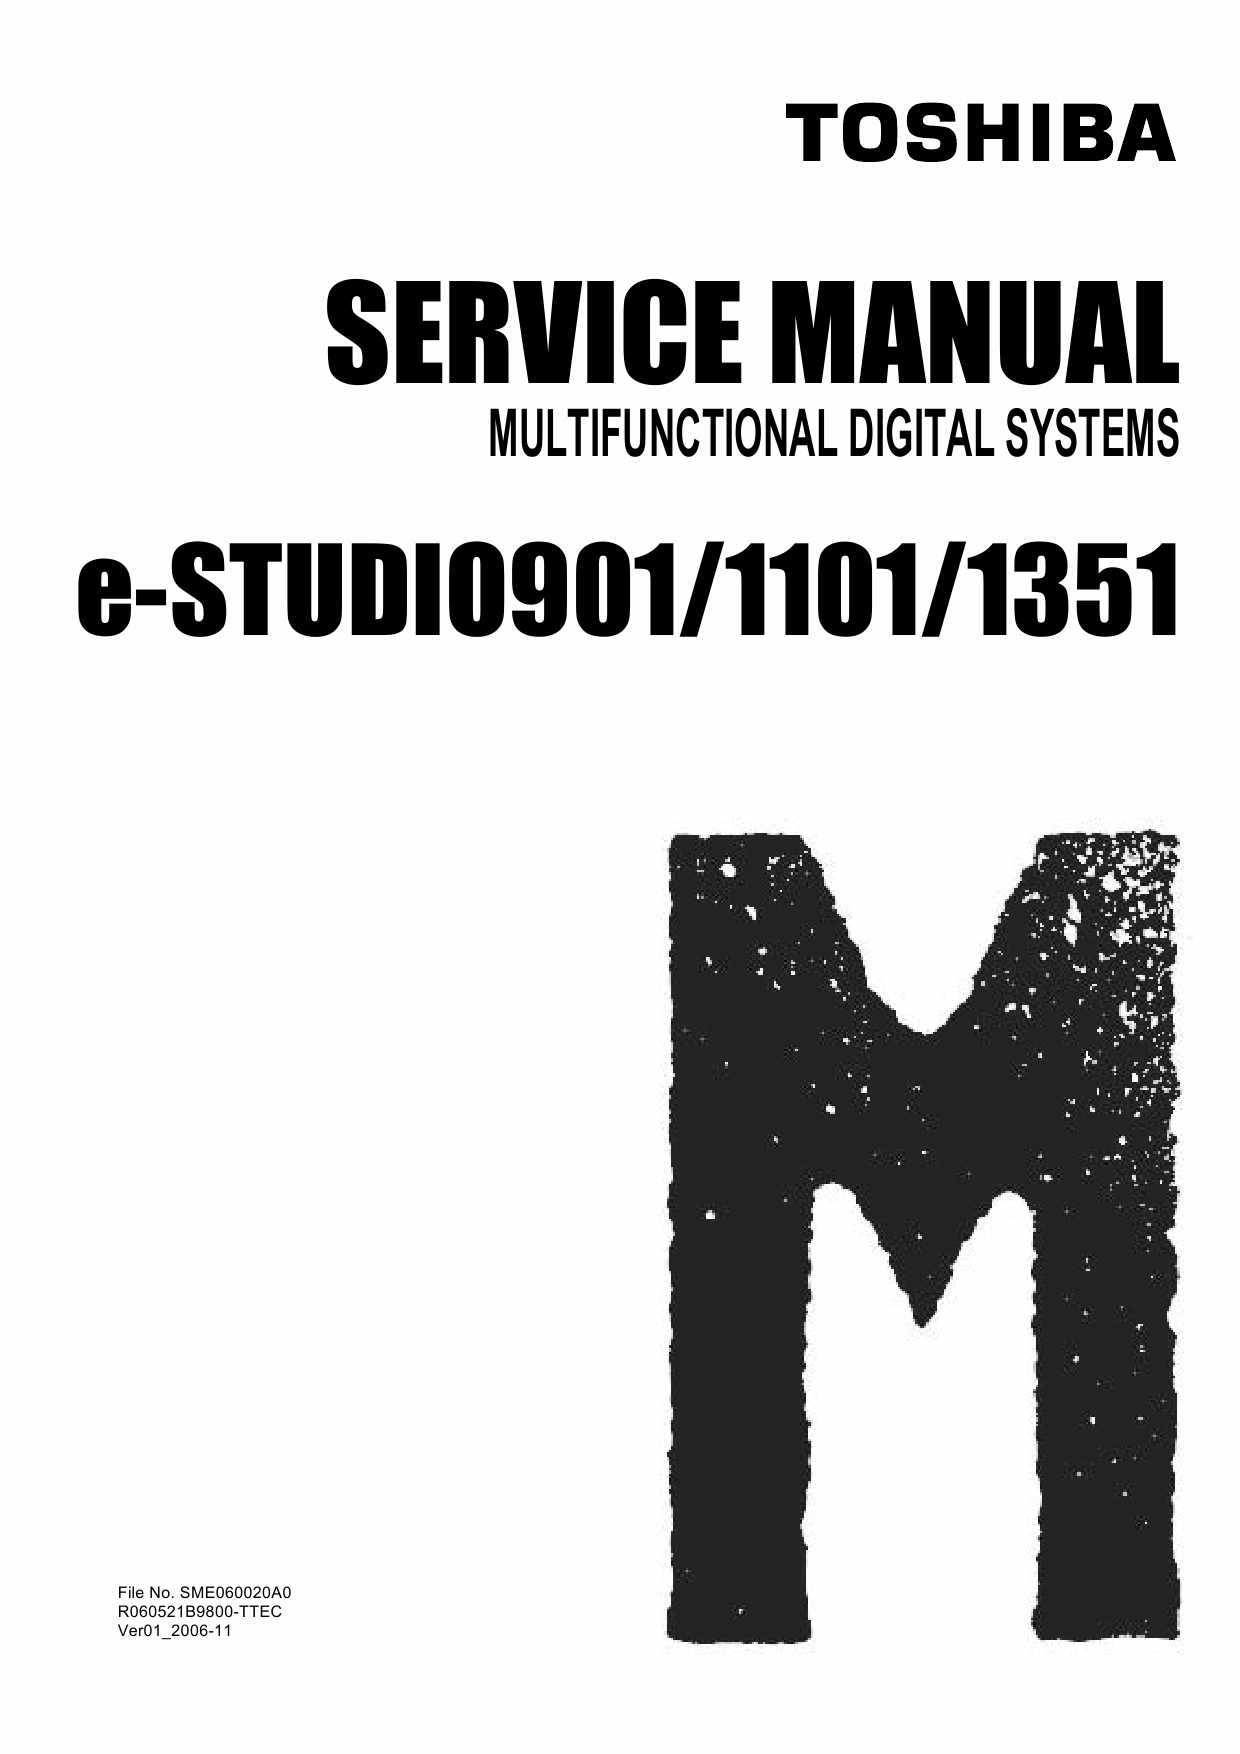 TOSHIBA e-STUDIO 901 1101 1351 Service Manual-1